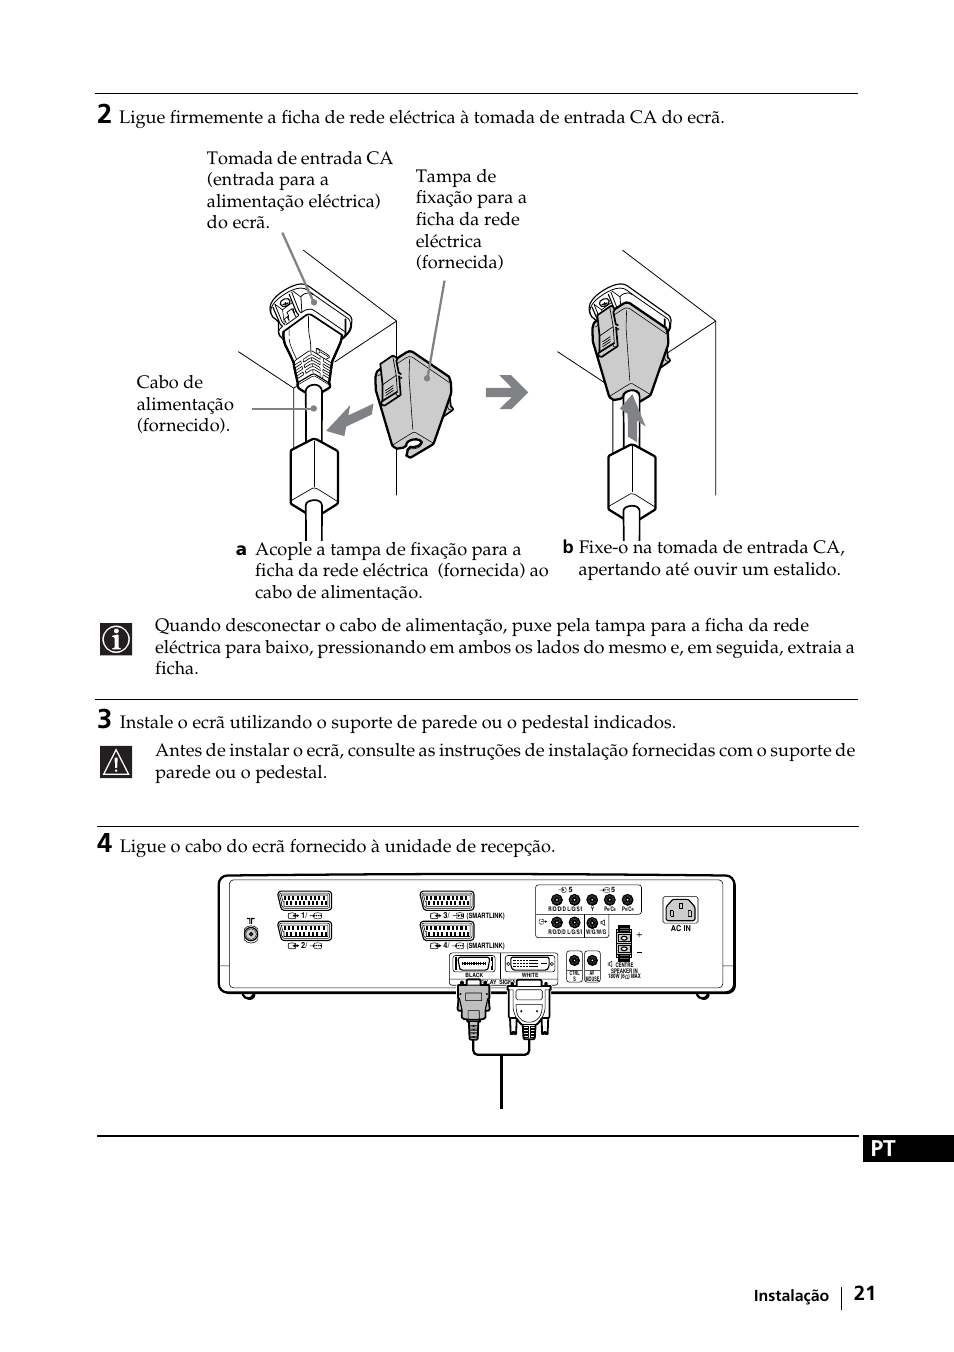 Instalação | Sony KE-42MR1 Manuale d'uso | Pagina 172 / 302